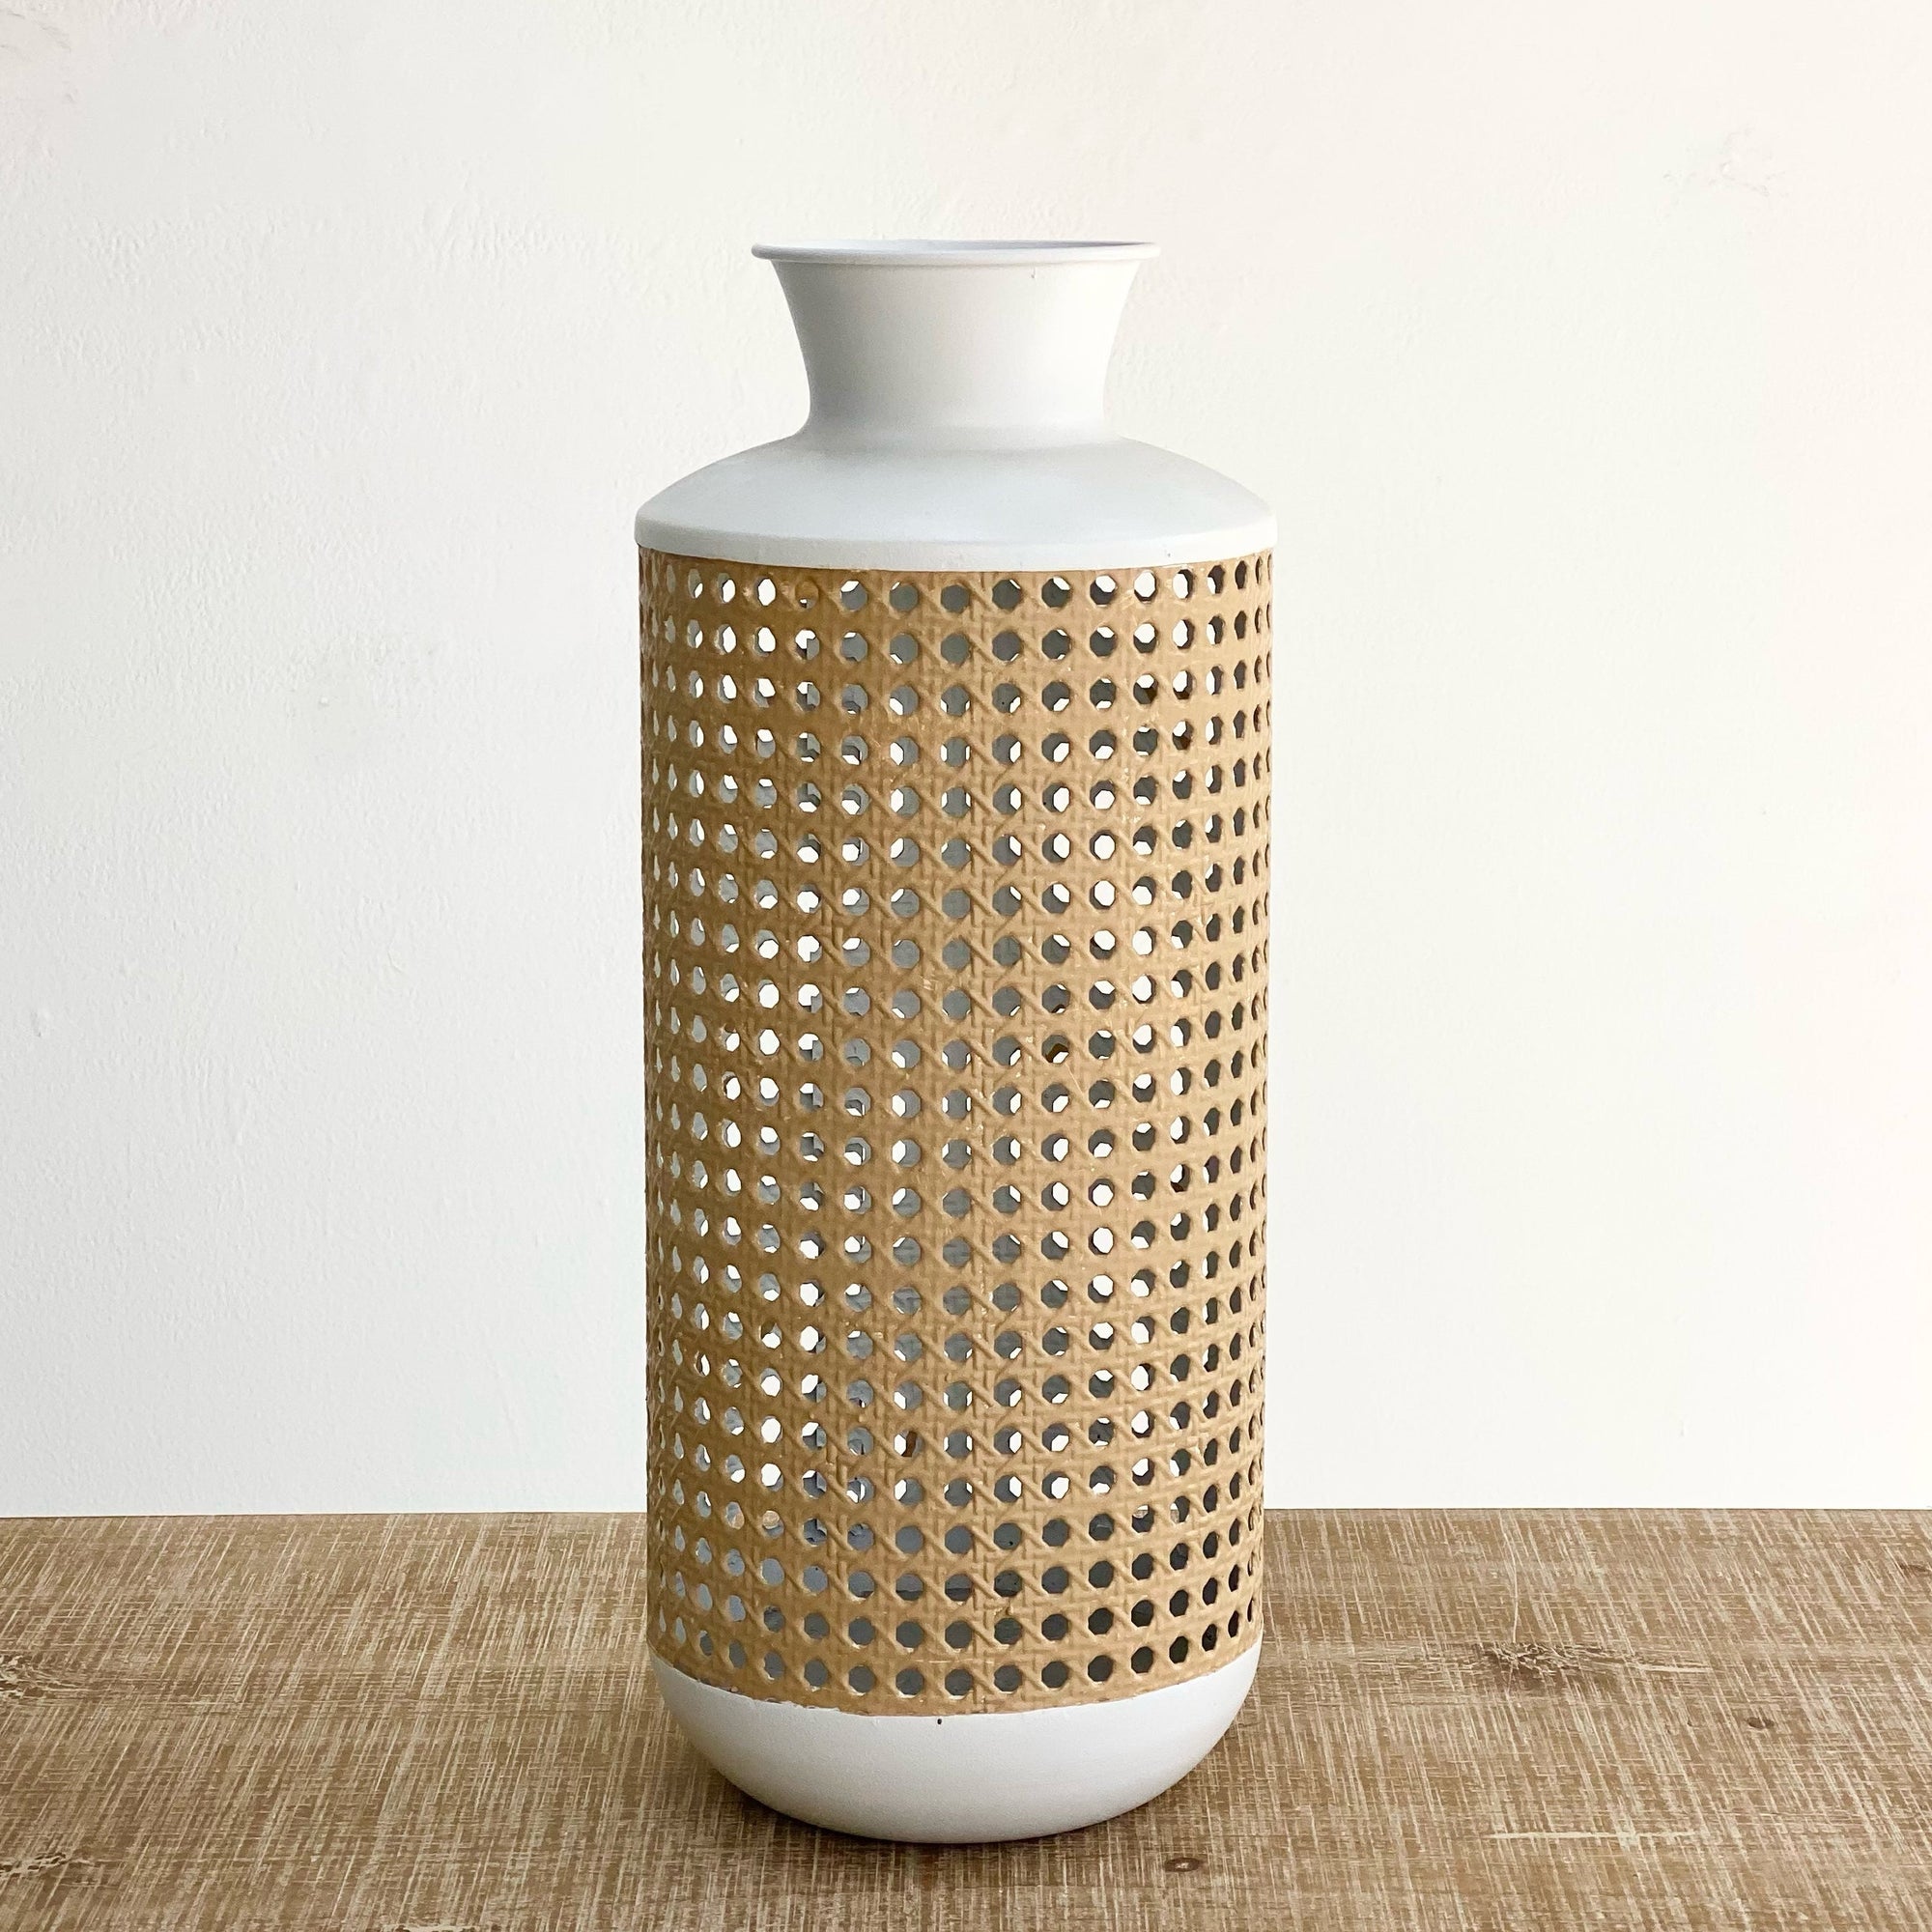 White Rattan Look-Alike Metal Vase